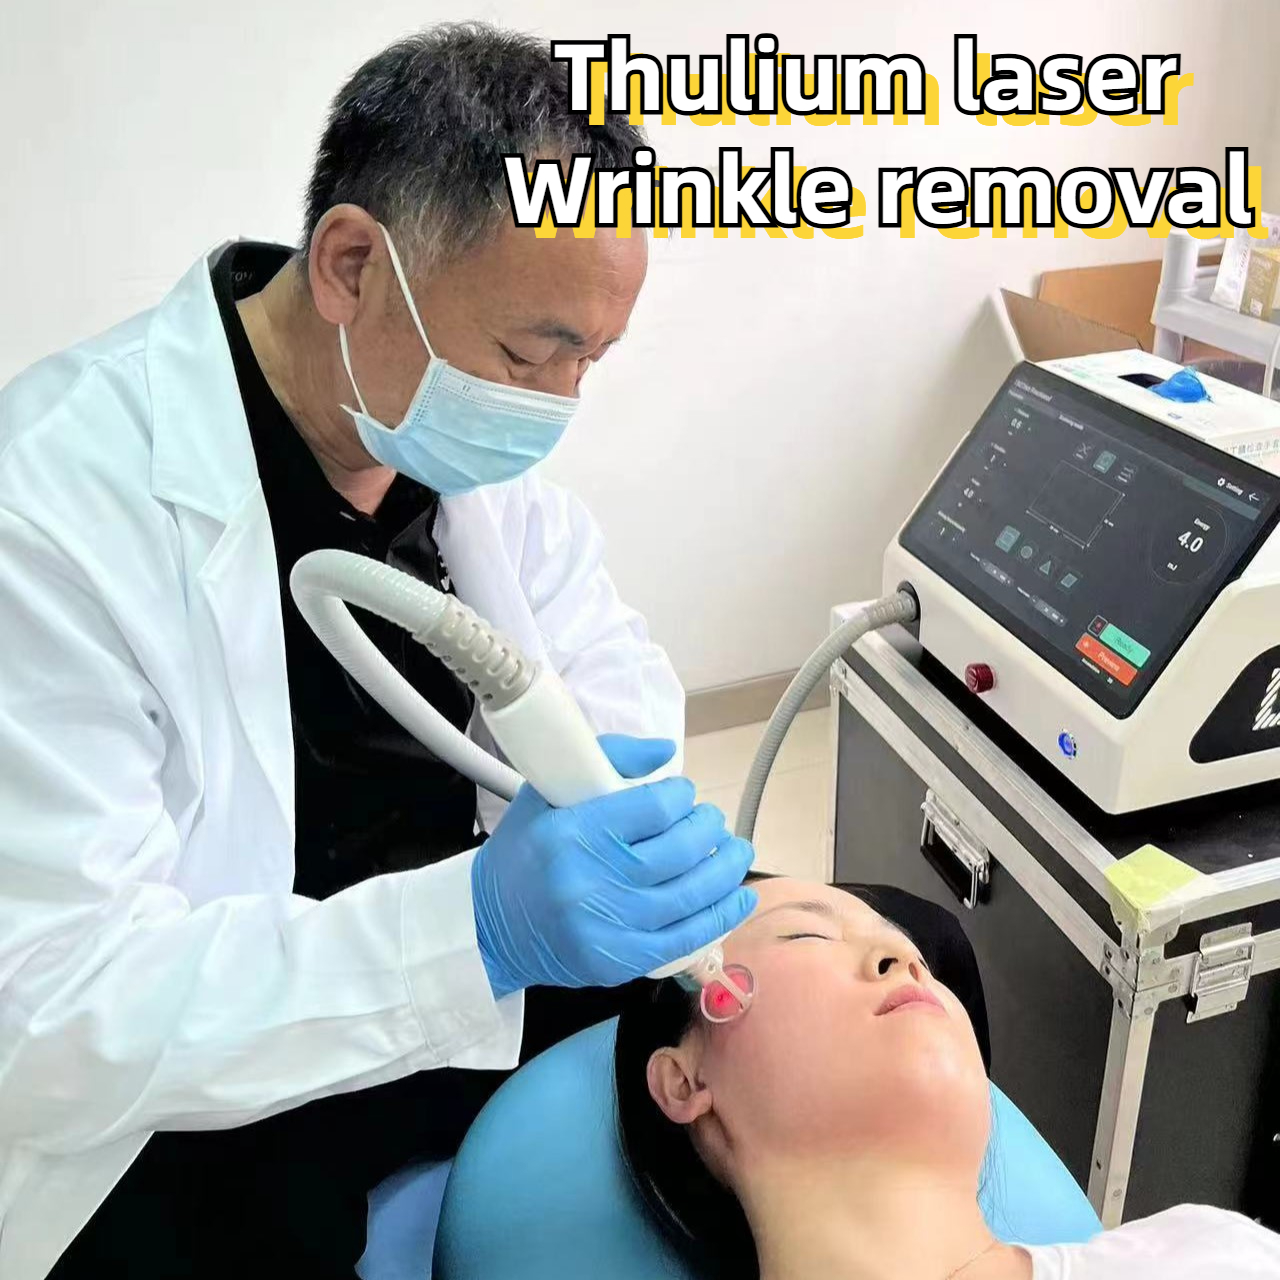 1927nm Thulium laser to remove skin wrinkles